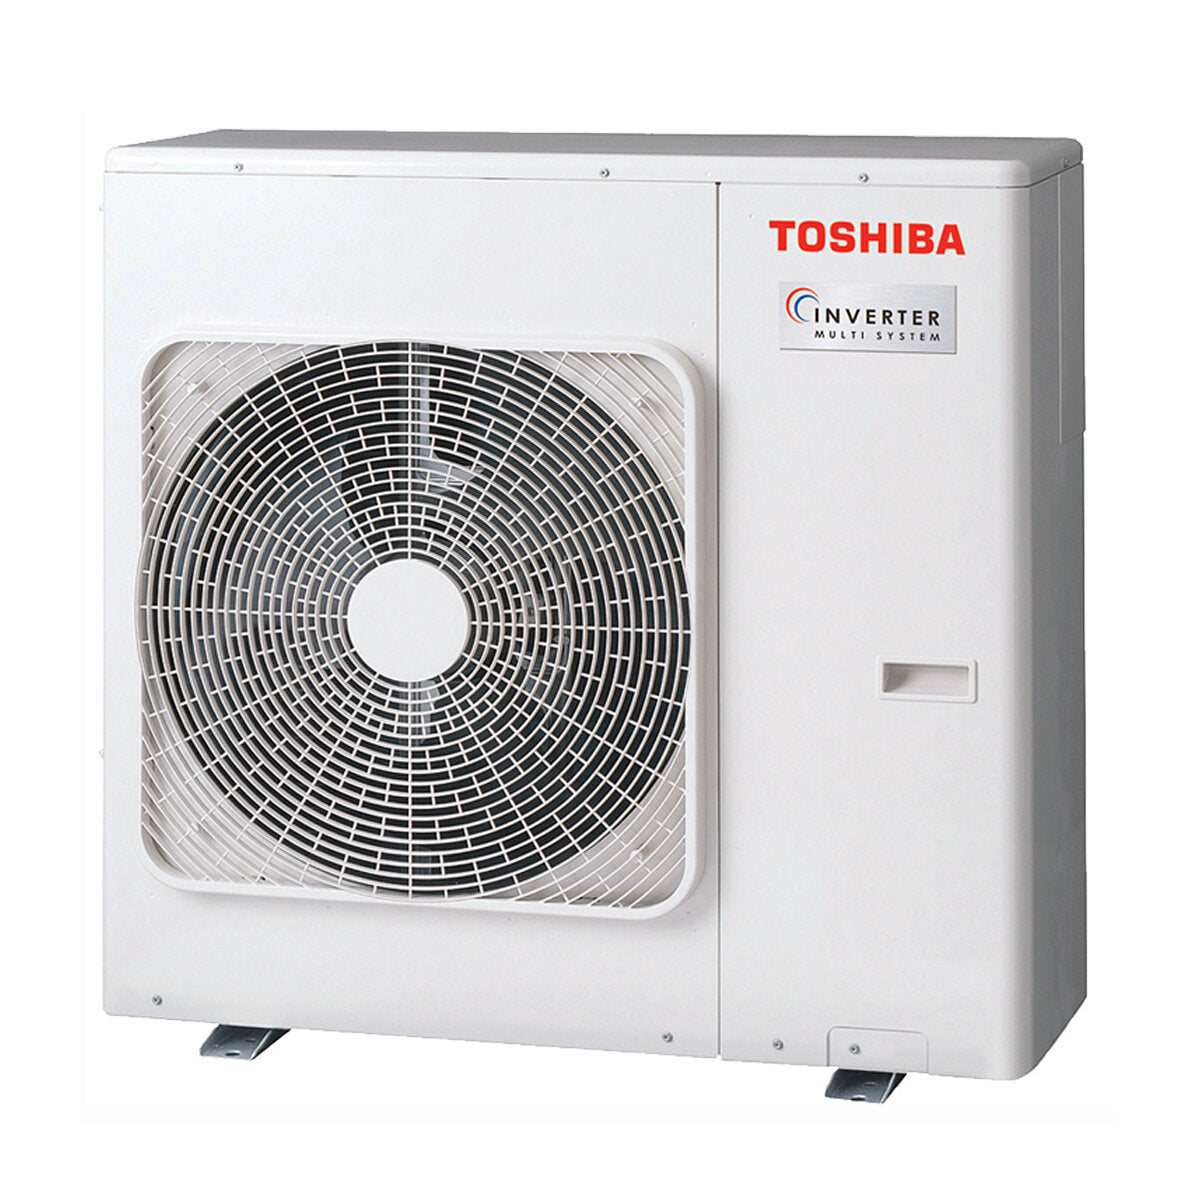 Toshiba NOUVEAU SEIYA climatiseur penta split 9000 + 9000 + 9000 + 9000 + 16000 BTU onduleur A ++ unité extérieure 10,0 kW